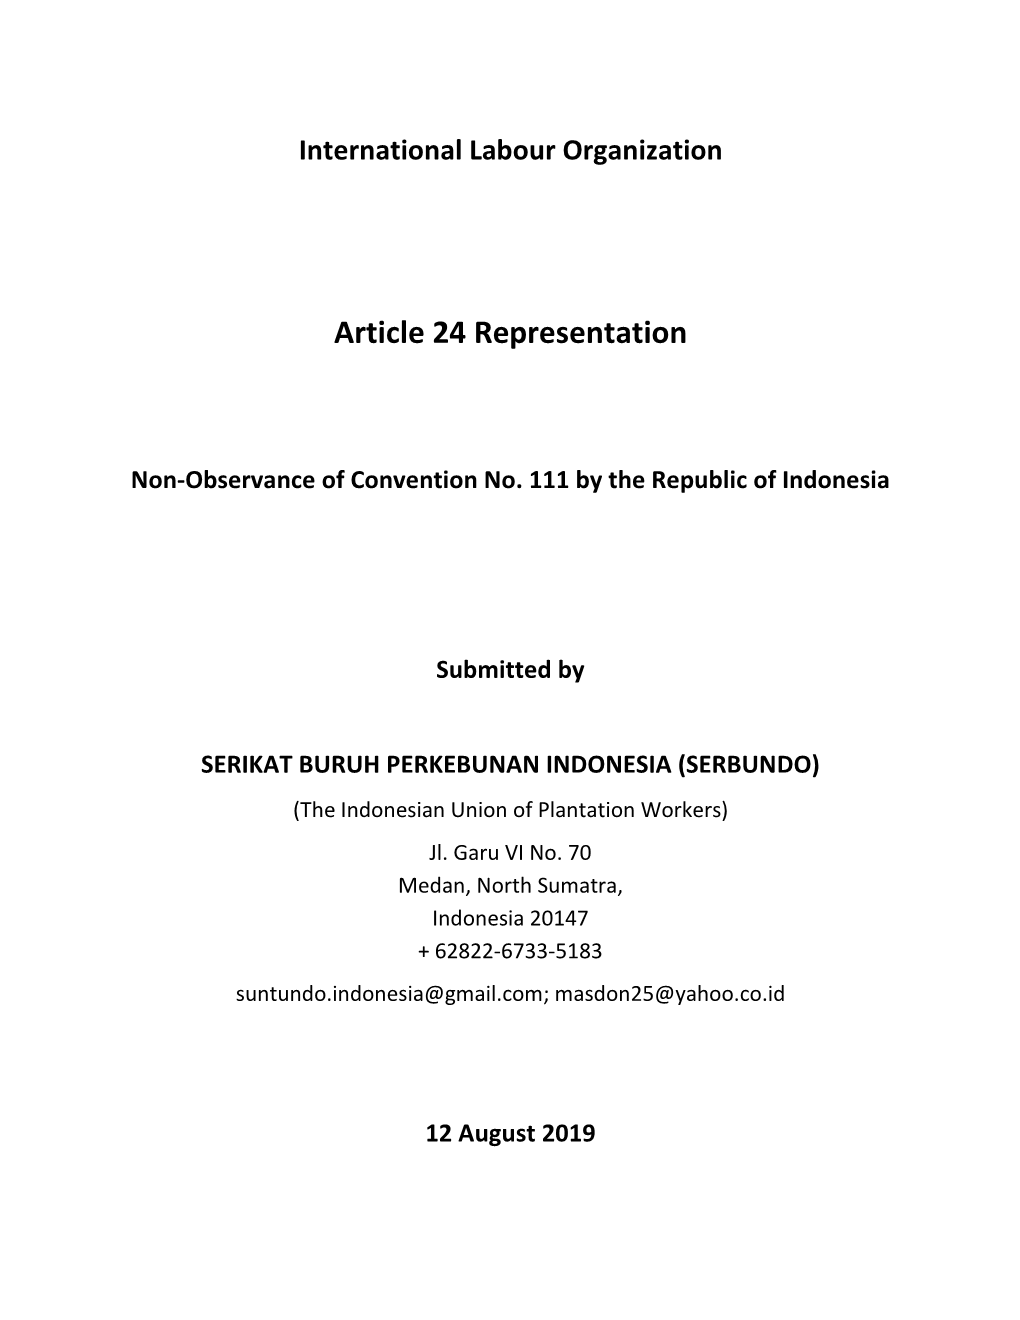 Ompu Ronggur ILO111 Submission